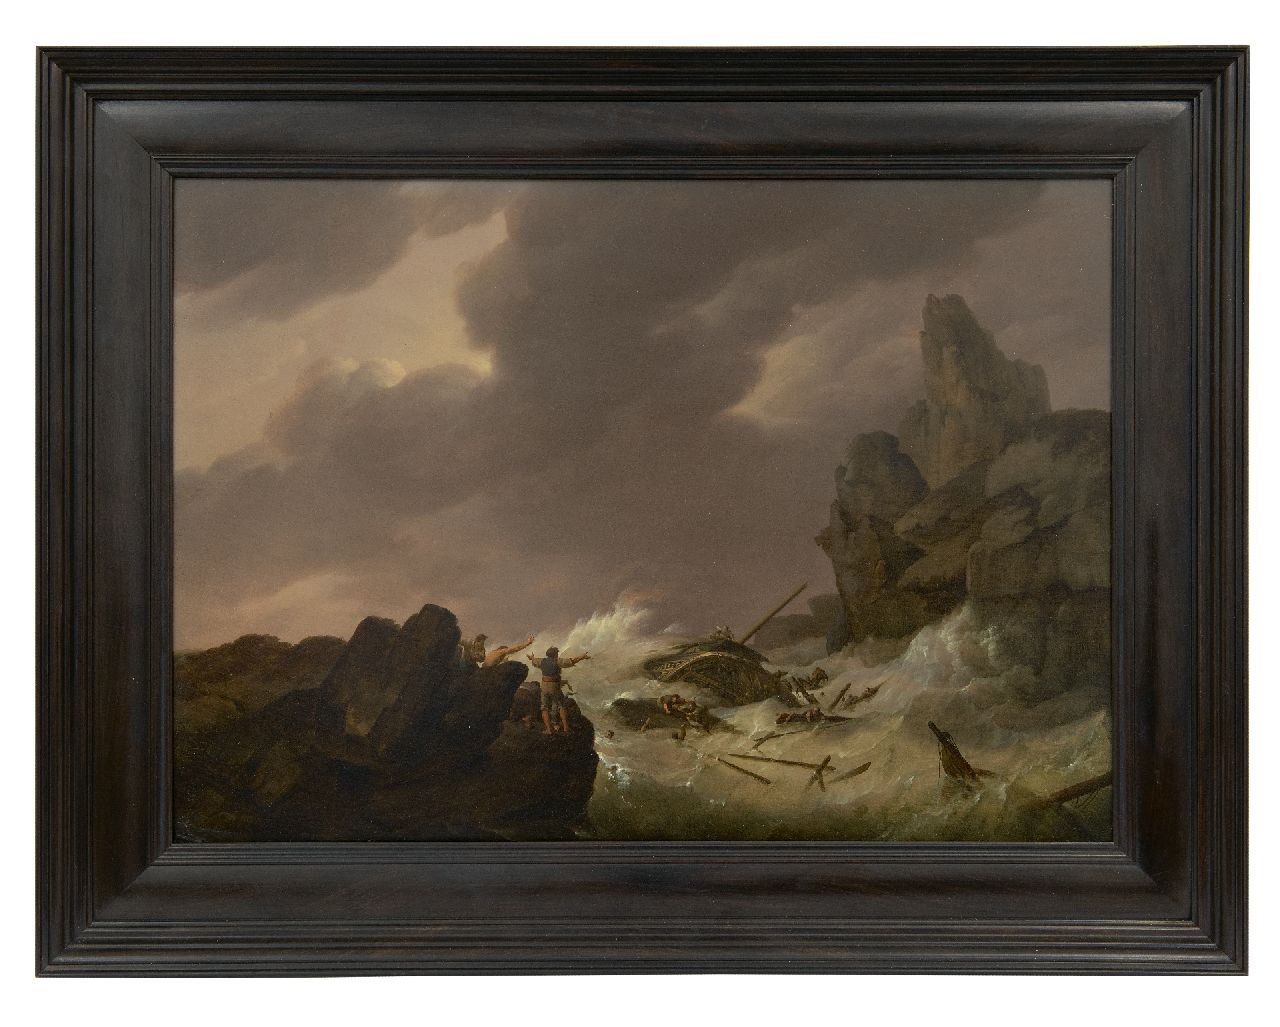 Koekkoek J.H.  | Johannes Hermanus Koekkoek, Shipwreck off the coast, oil on panel 34.1 x 47.7 cm, signed l.c. and painted ca. 1810